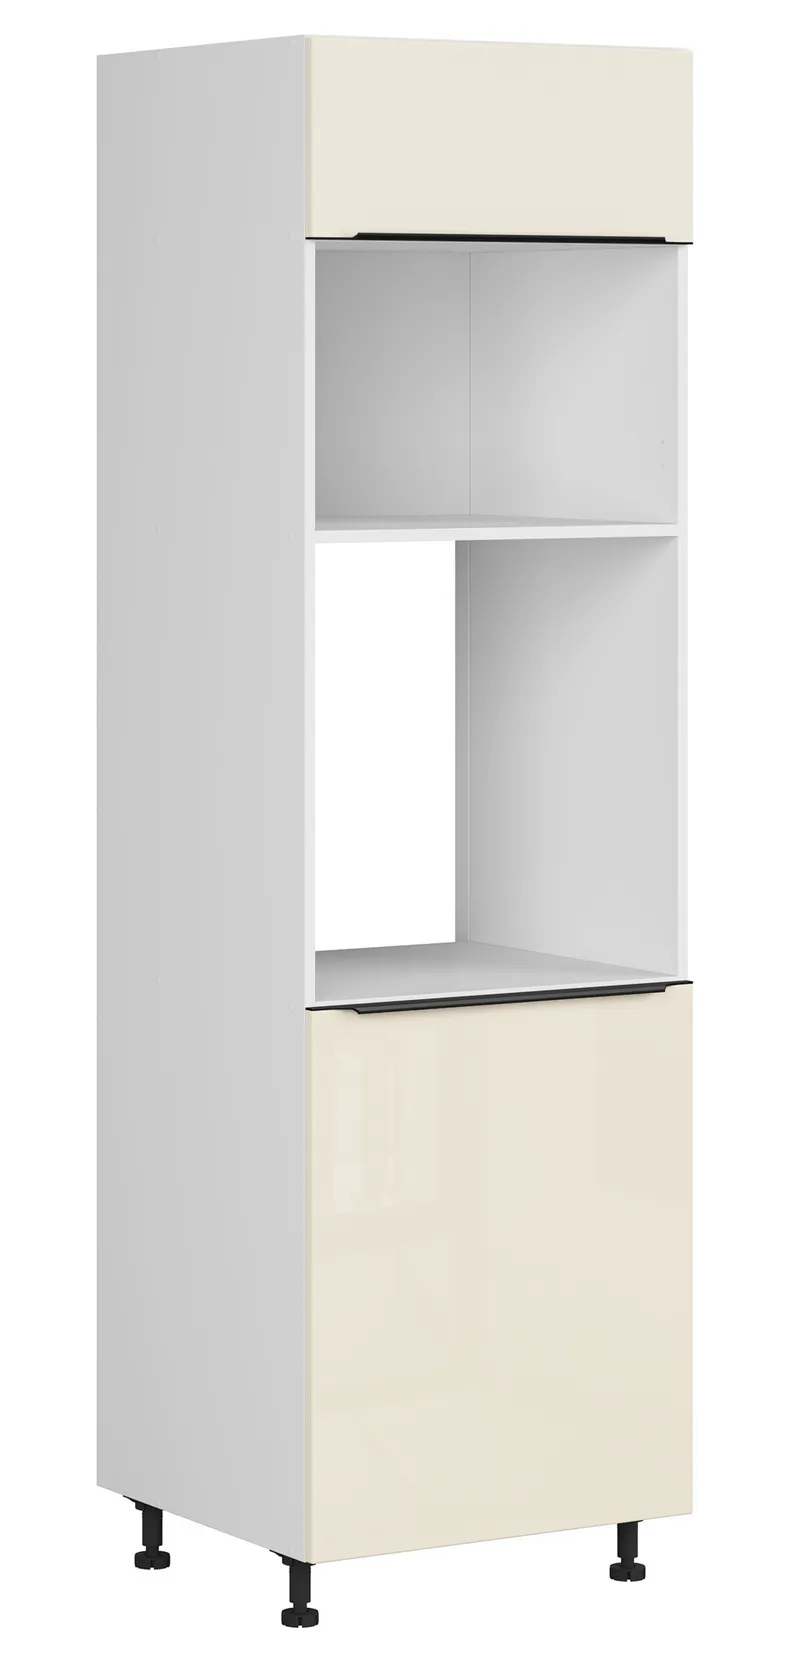 BRW Sole L6 60 см левосторонний кухонный шкаф магнолия жемчуг, альпийский белый/жемчуг магнолии FM_DPS_60/207_L/O-BAL/MAPE фото №2